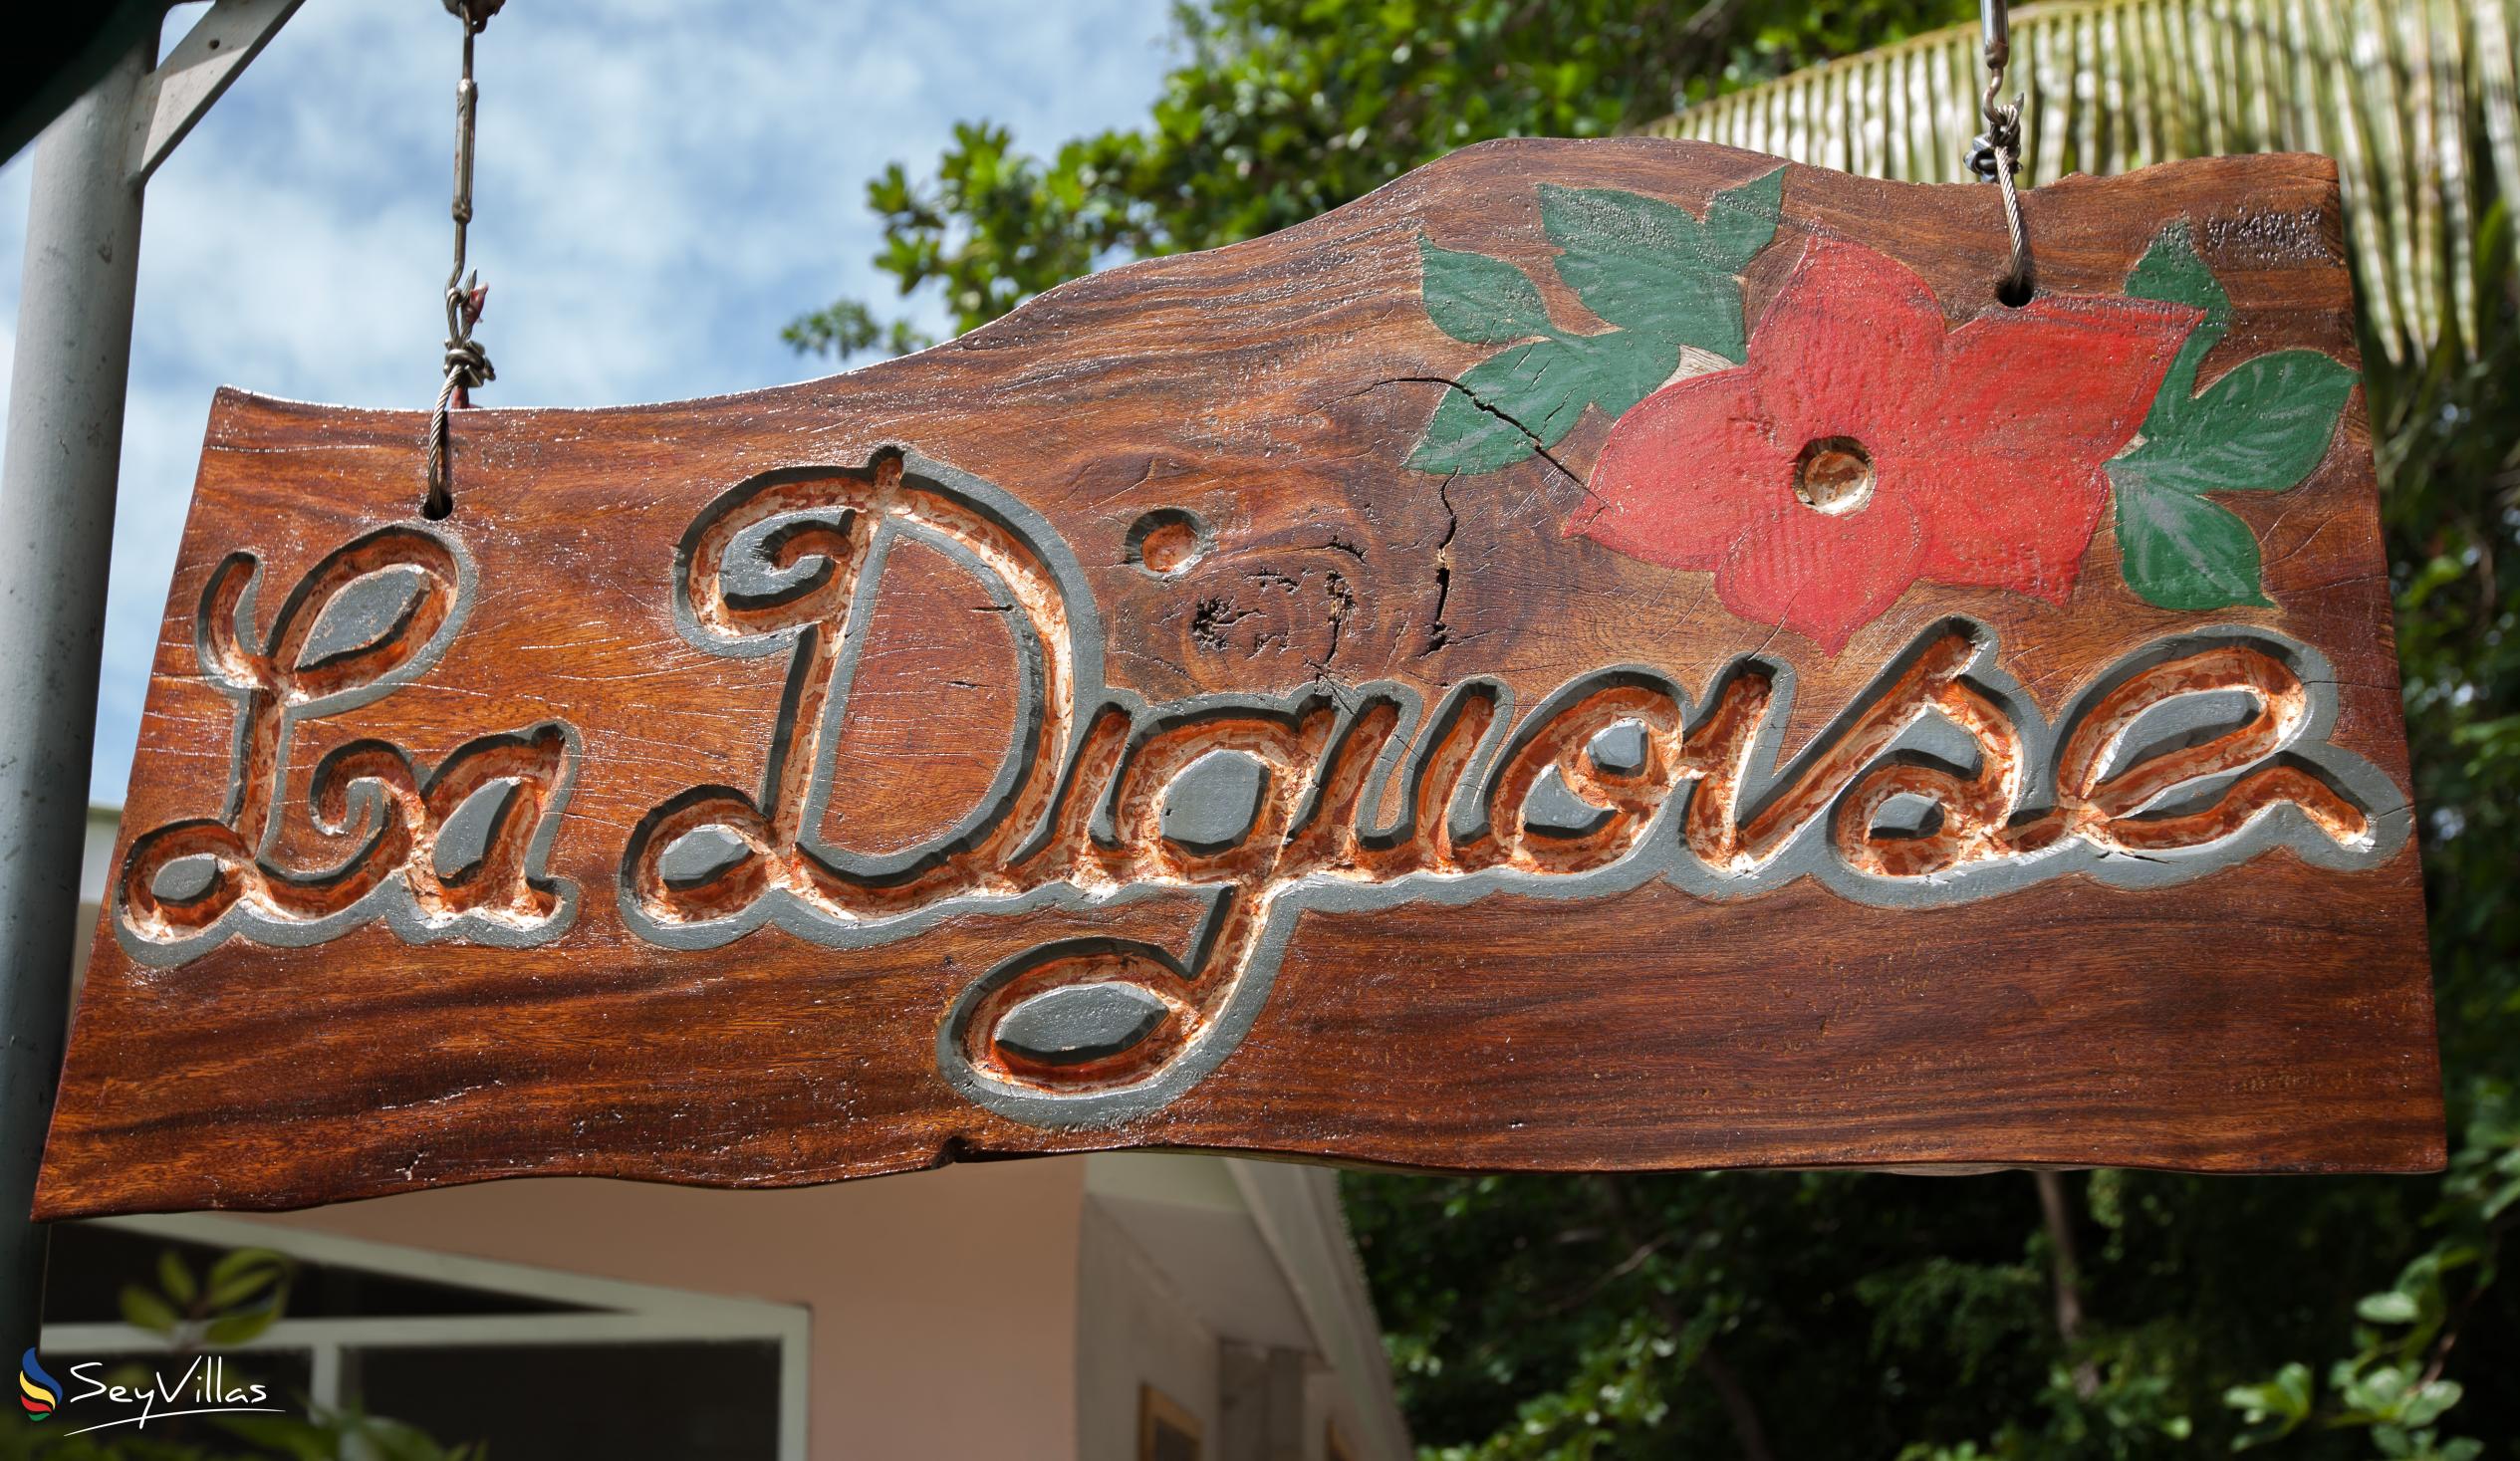 Photo 7: La Diguoise - Outdoor area - La Digue (Seychelles)